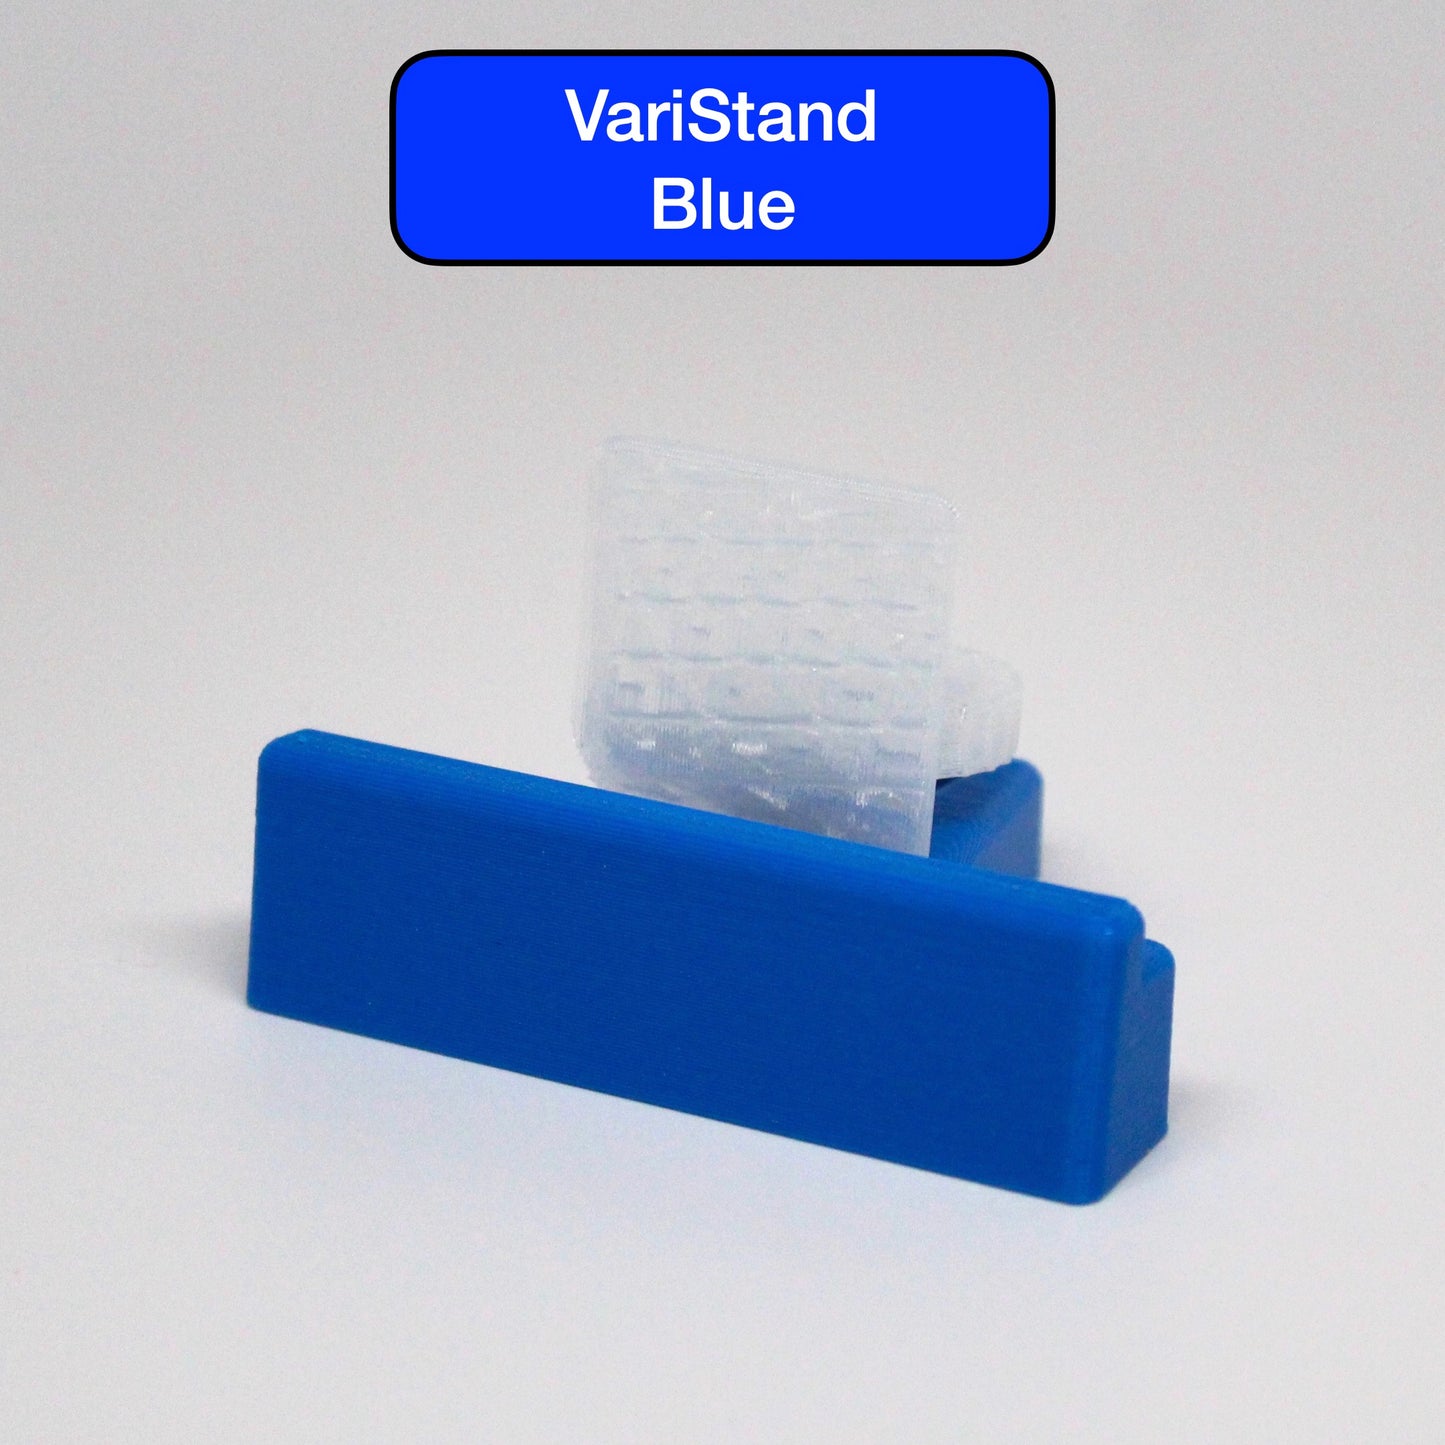 The Adjustable VariStand - Blue